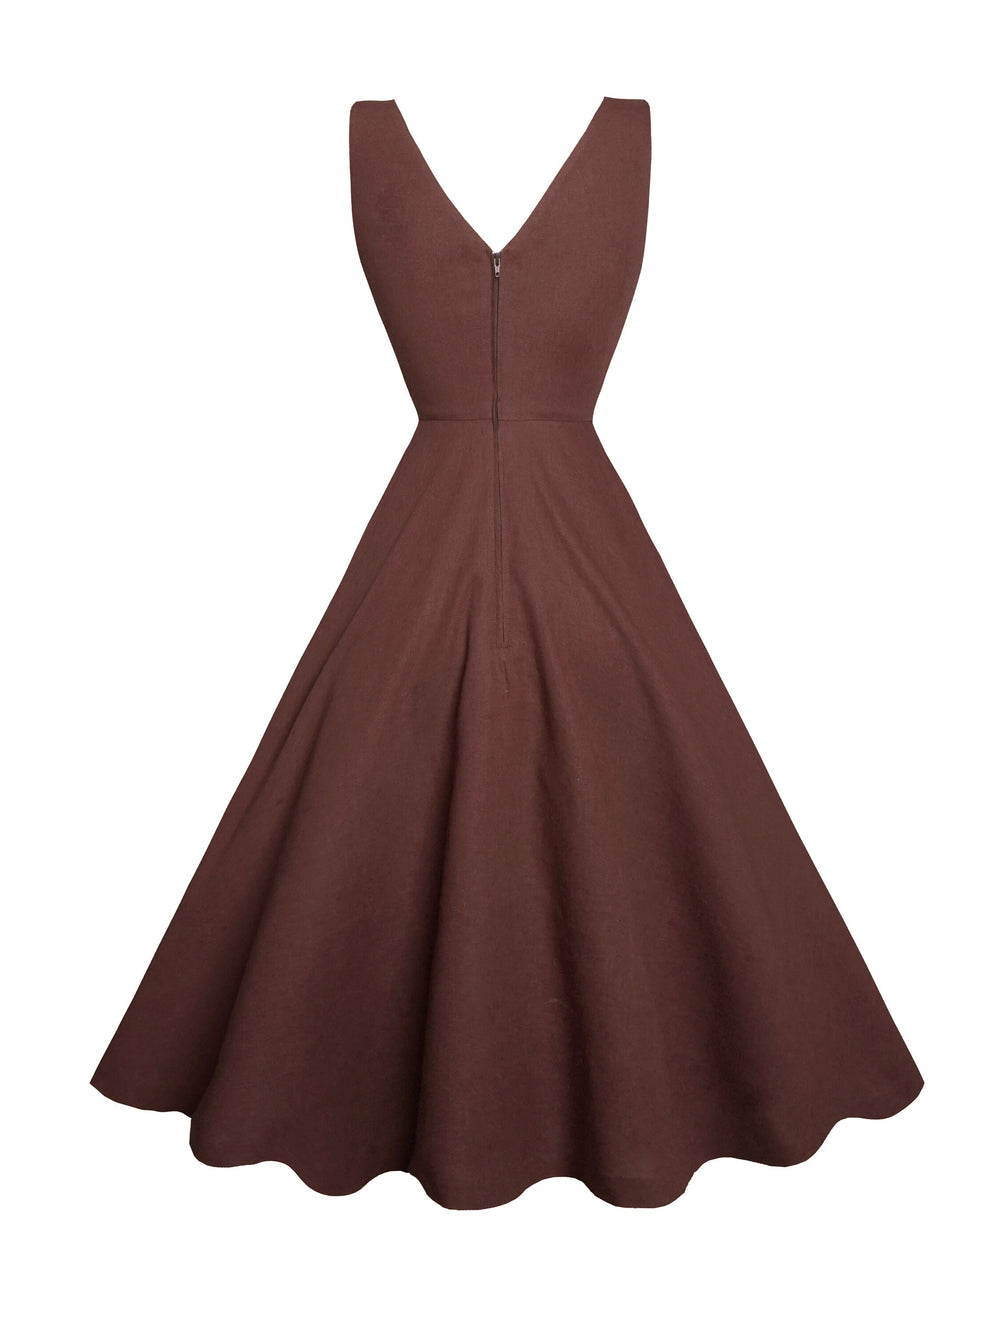 RTS - Size M - Diana Dress in Walnut Linen